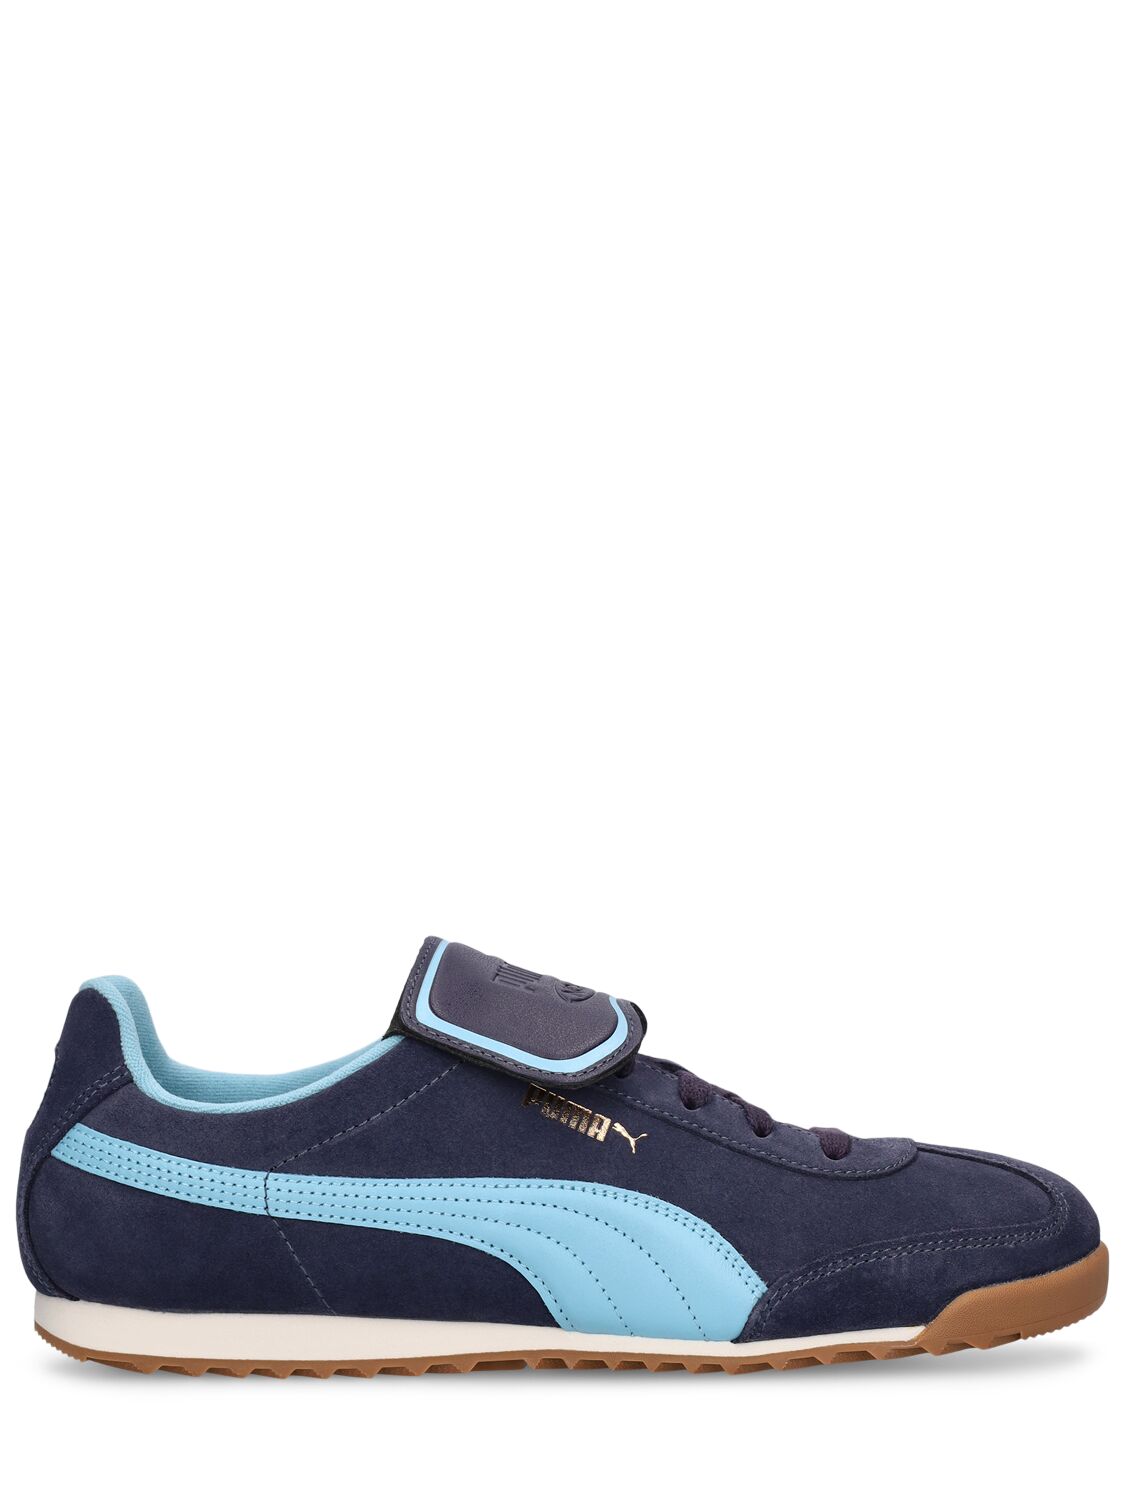 Puma Noah Arizona Sneakers In Blue